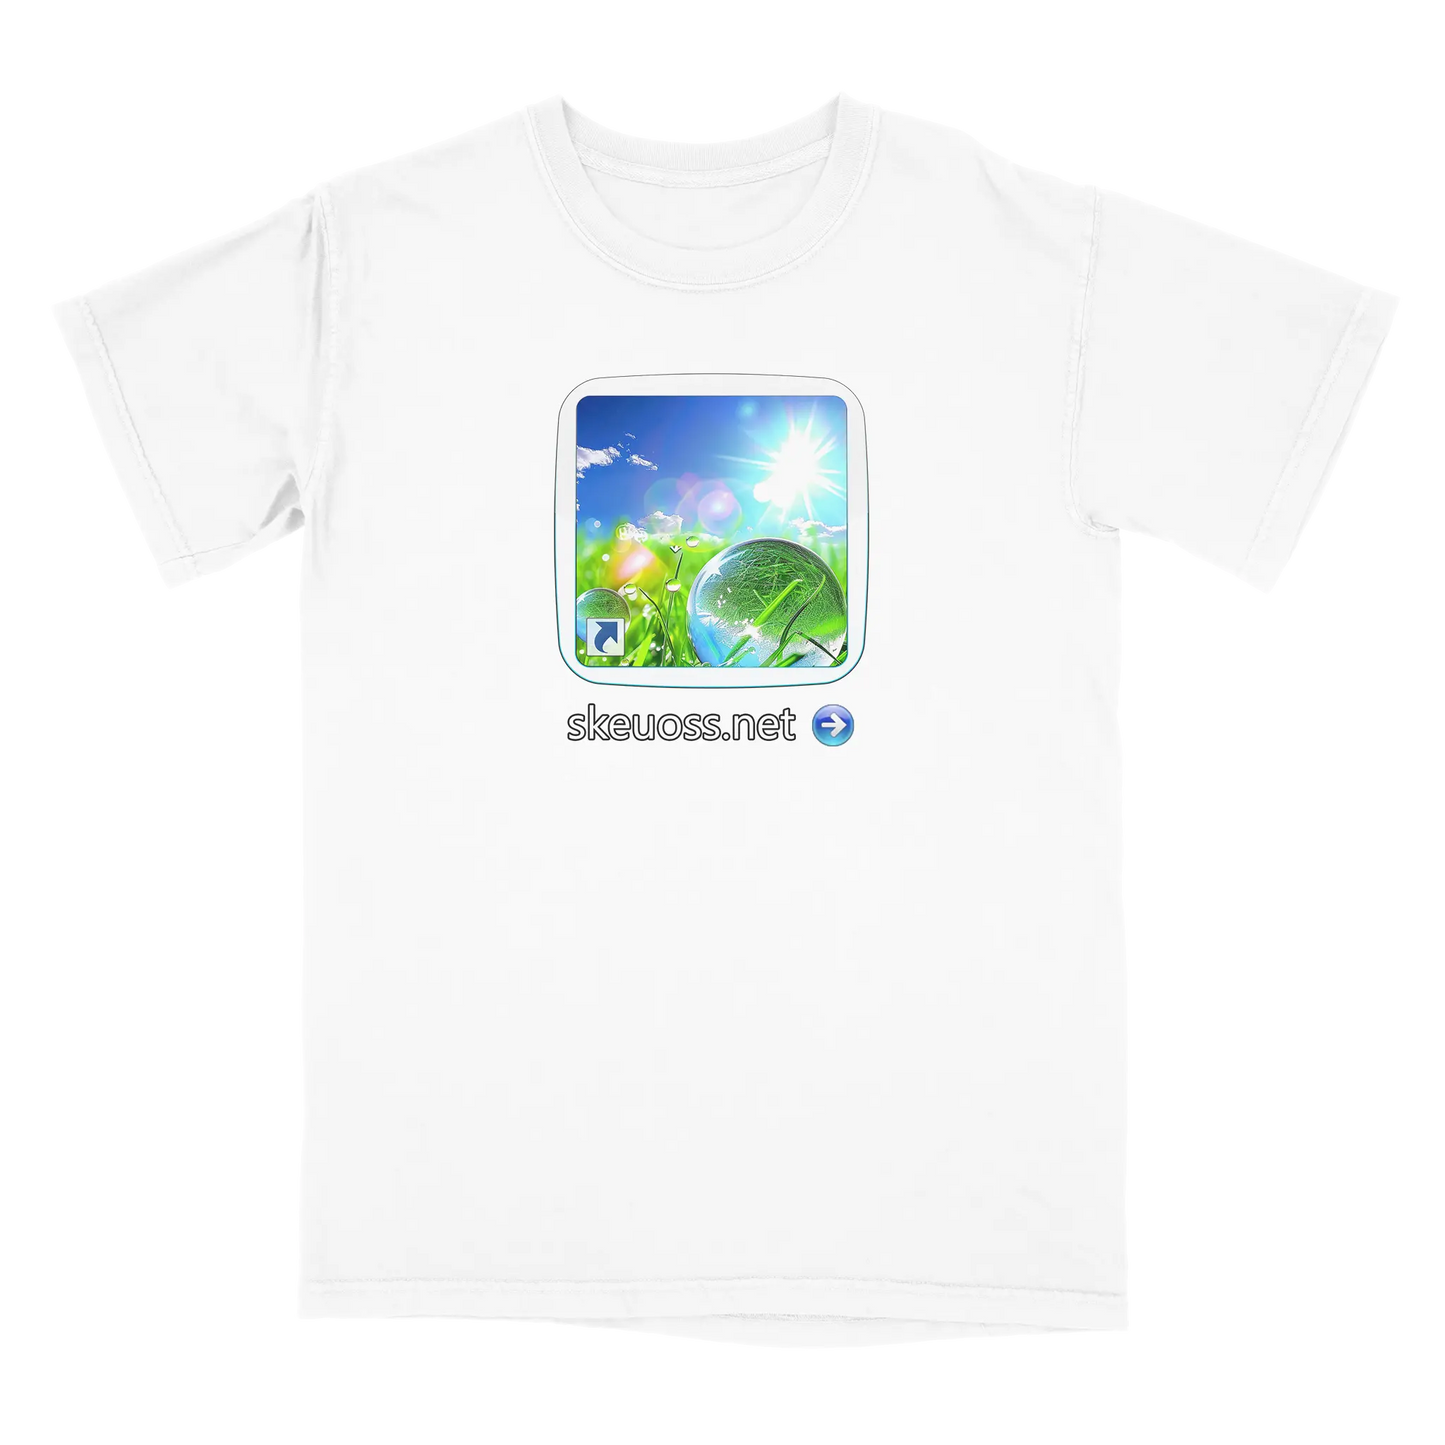 Frutiger Aero T-shirt - User Login Collection - User 259